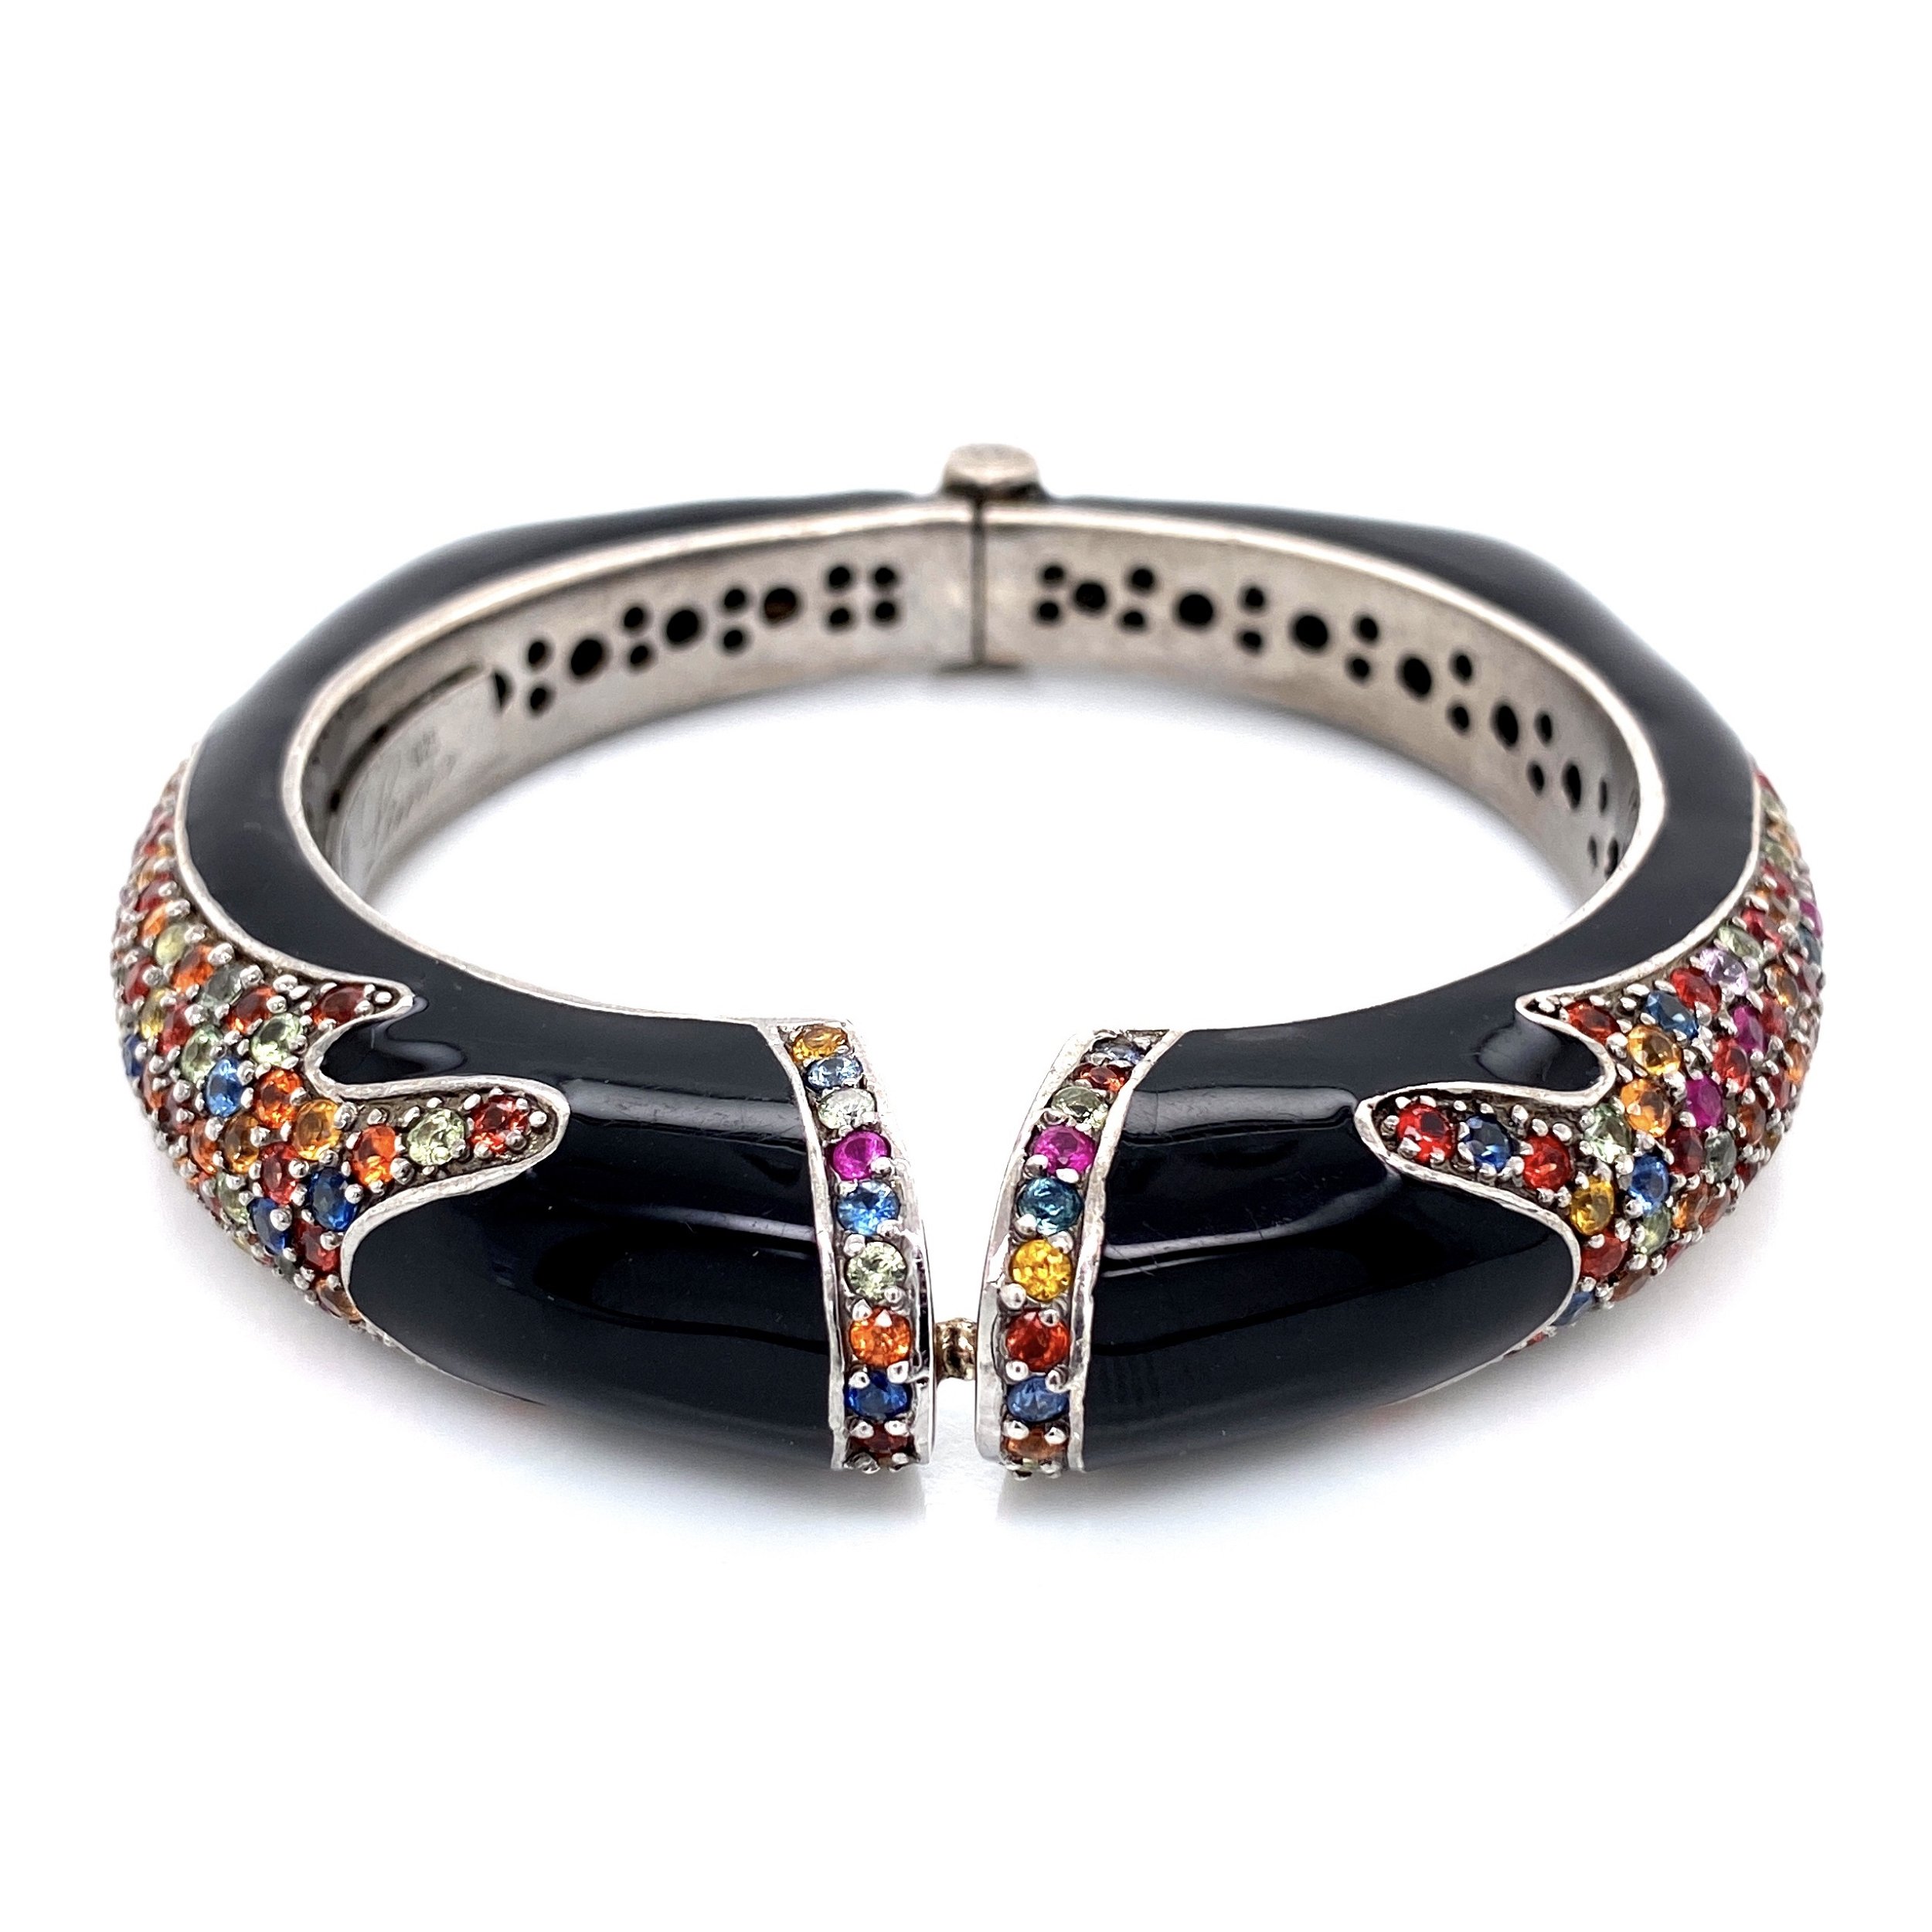 Adjustable Bracelet Bangle Jewelry Silver Gift for Her Women Teen Girls